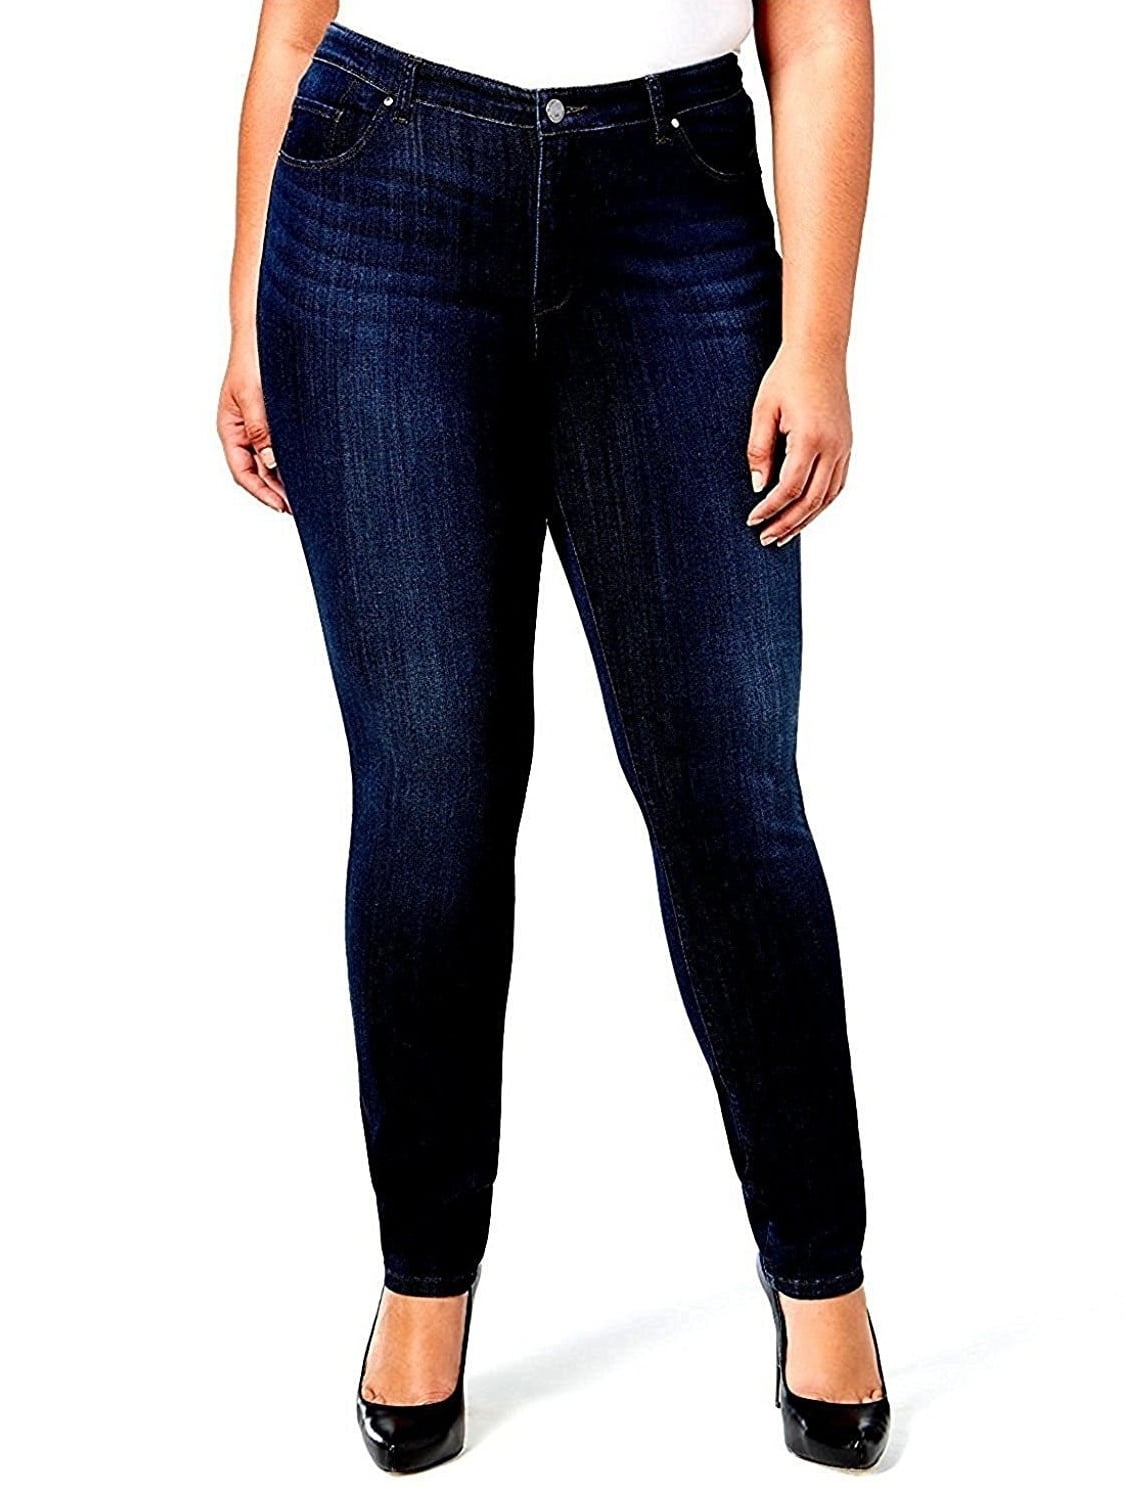 NEW D&B WOMEN'S PLUS SIZE Stretch premium BLACK denim jeans Skinny PANTS 39469MS 